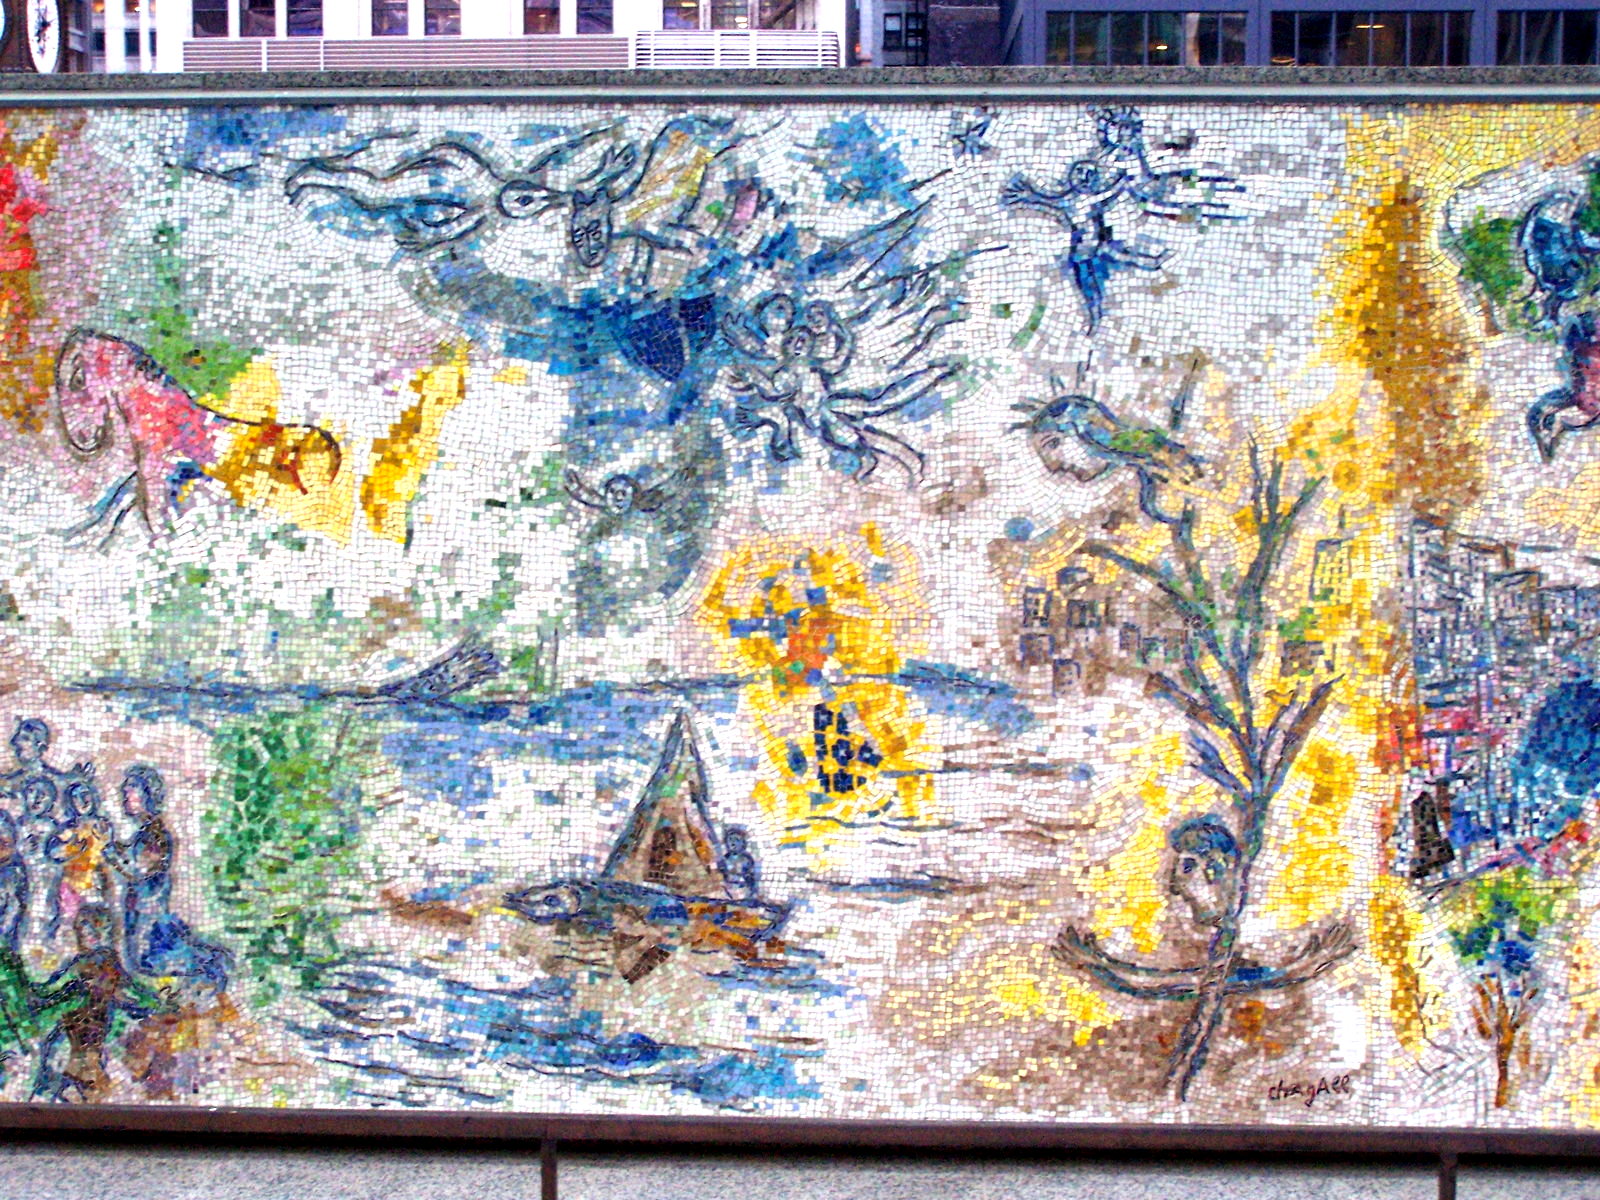 Chagall Mosaic “The Four Seasons”